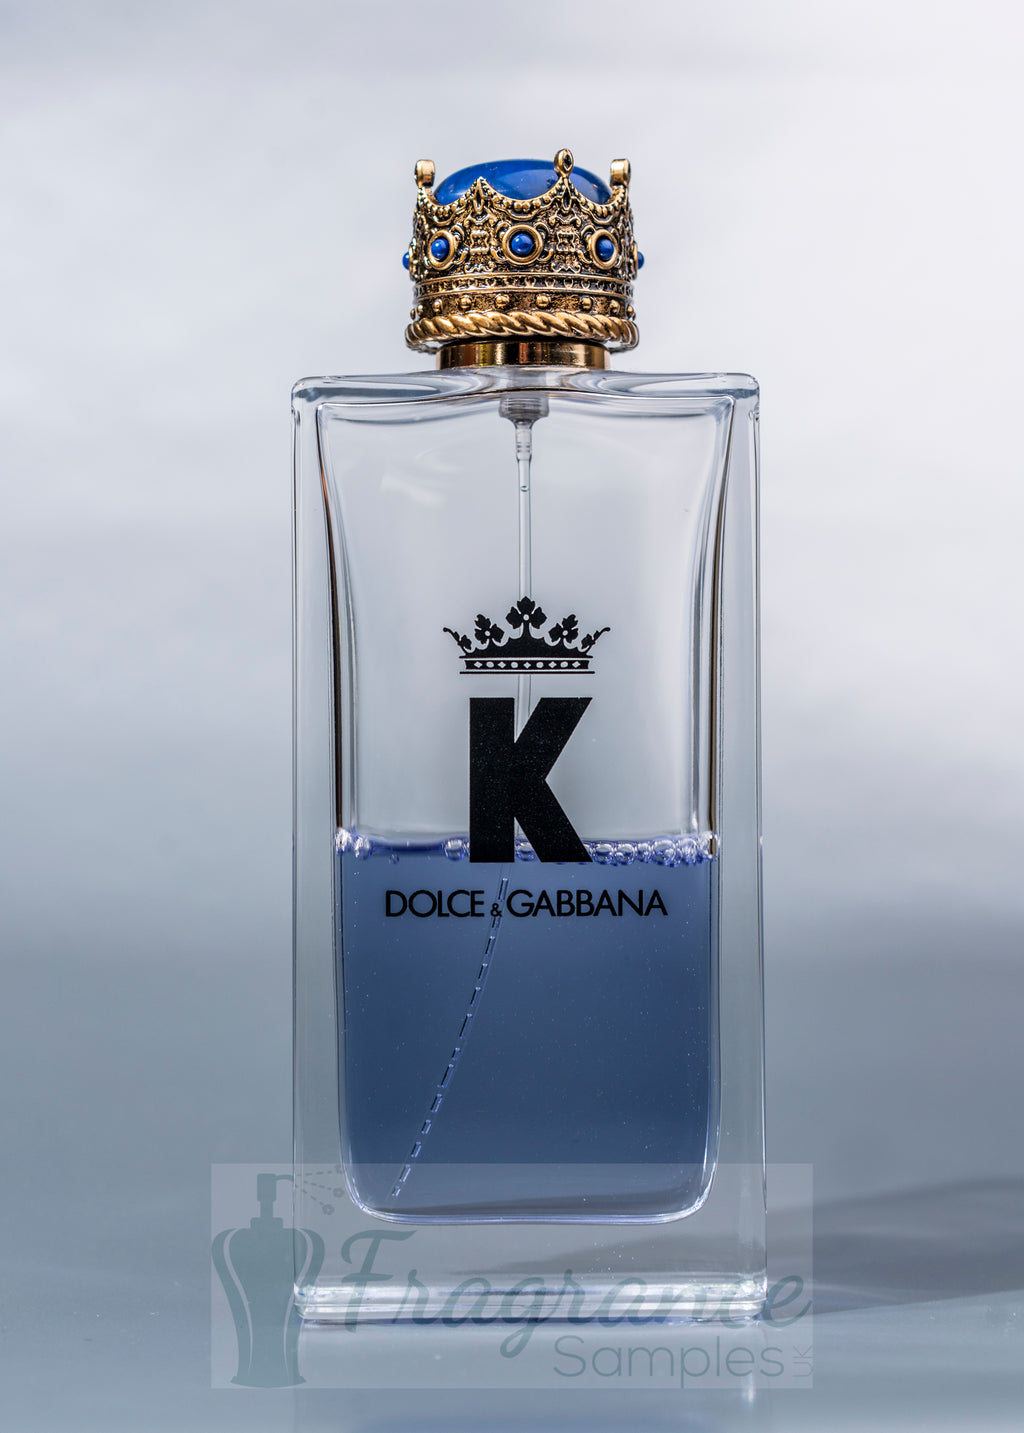 Dolce and Gabbana Fragrance Samples - Fragrance Samples UK